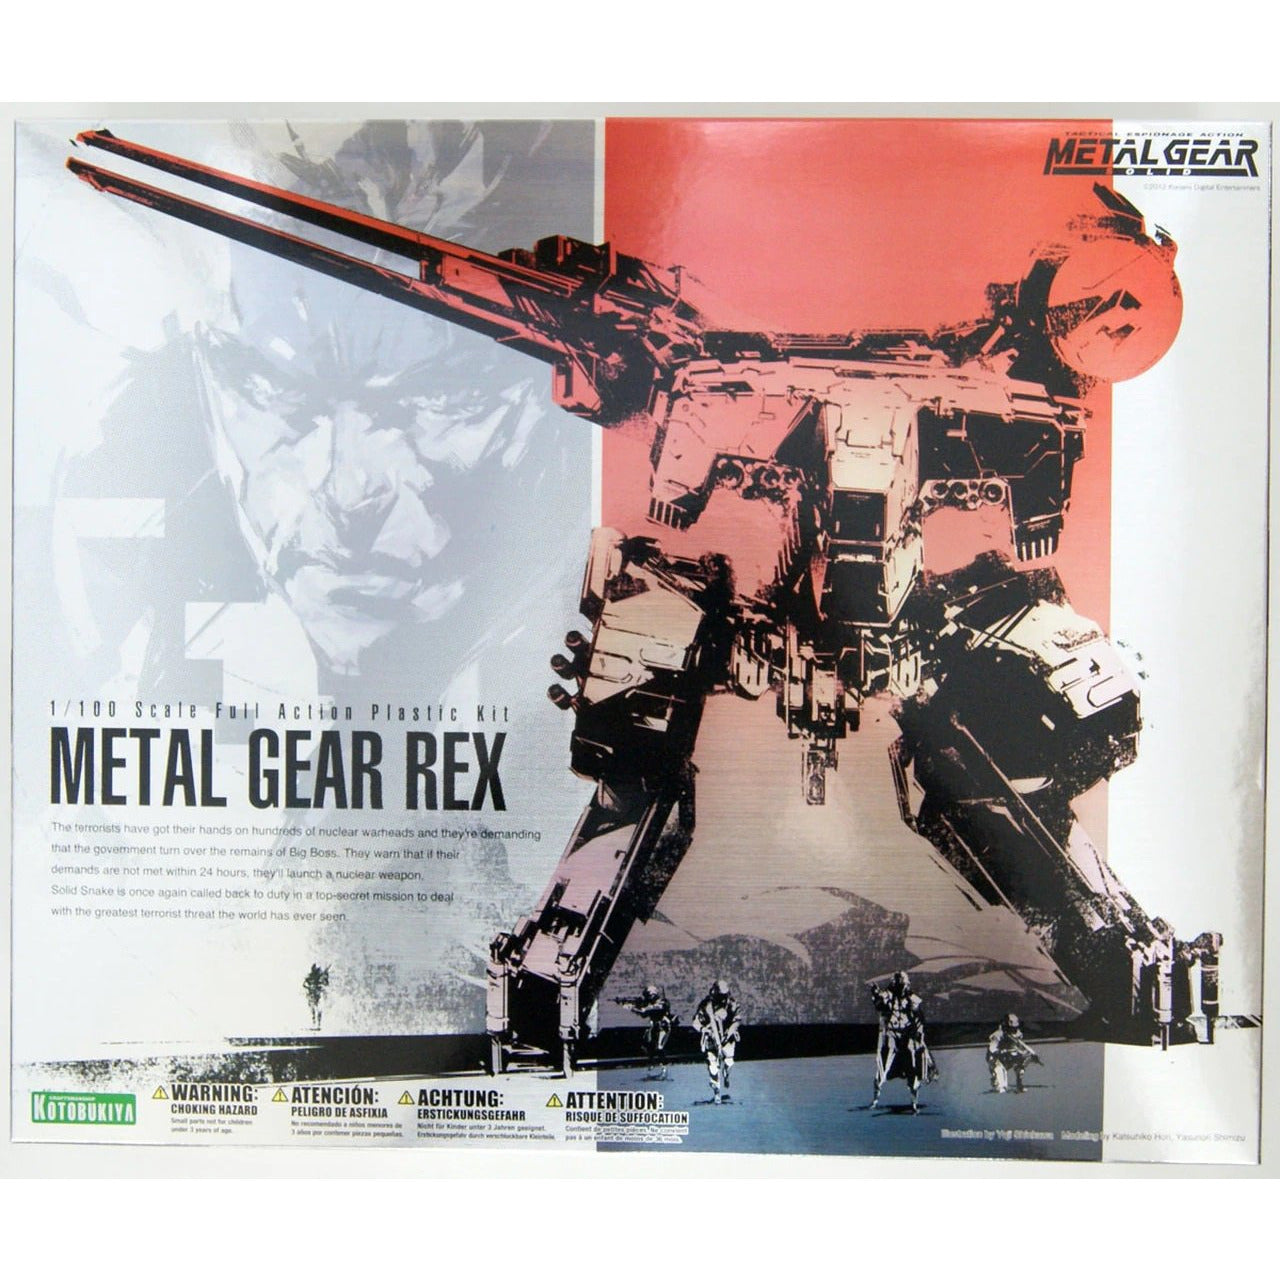 Metal Gear Rex 1/100 Model Kit #KP221 from Metal Gear Solid by Kotobukiya